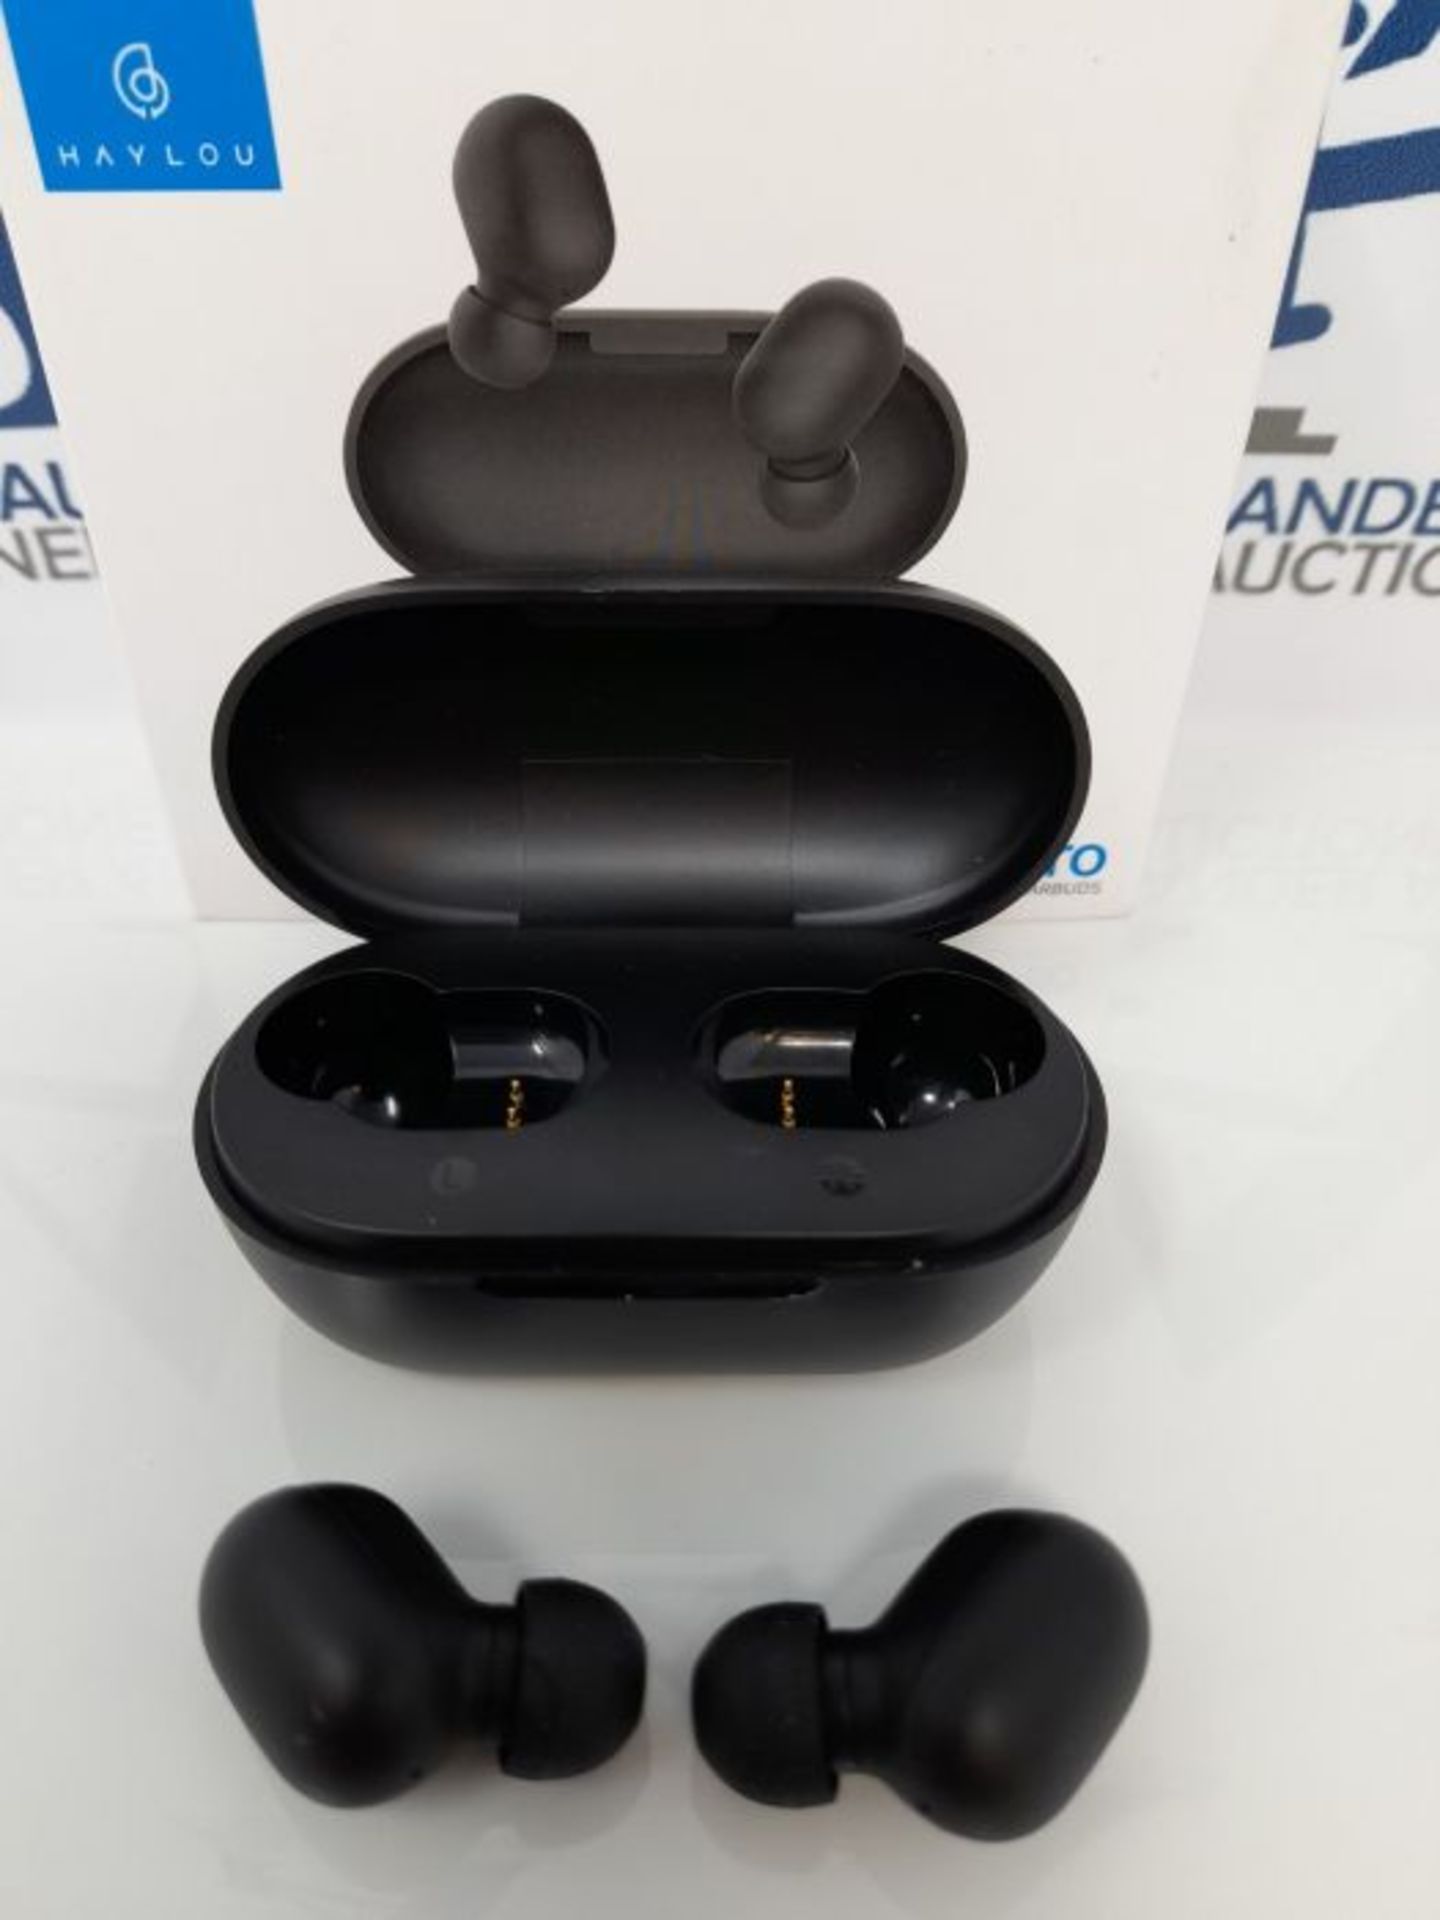 HAYLOU, GT1 PRO True wireless earbuds Black - Image 3 of 3